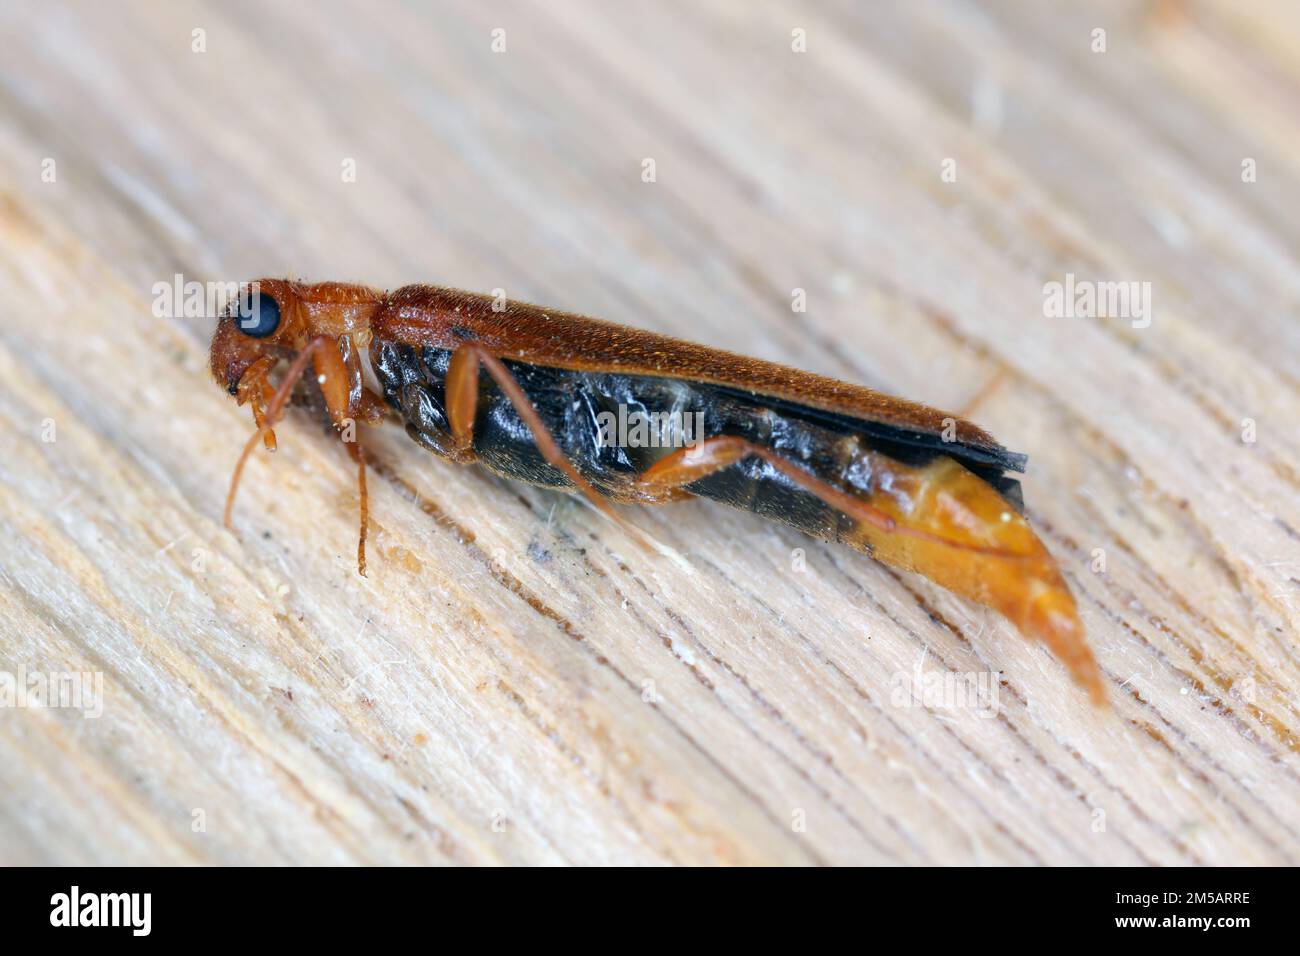 Large timberworm, European sapwood timberworm (Hylecoetus dermestoides), sitting on wood. Stock Photo